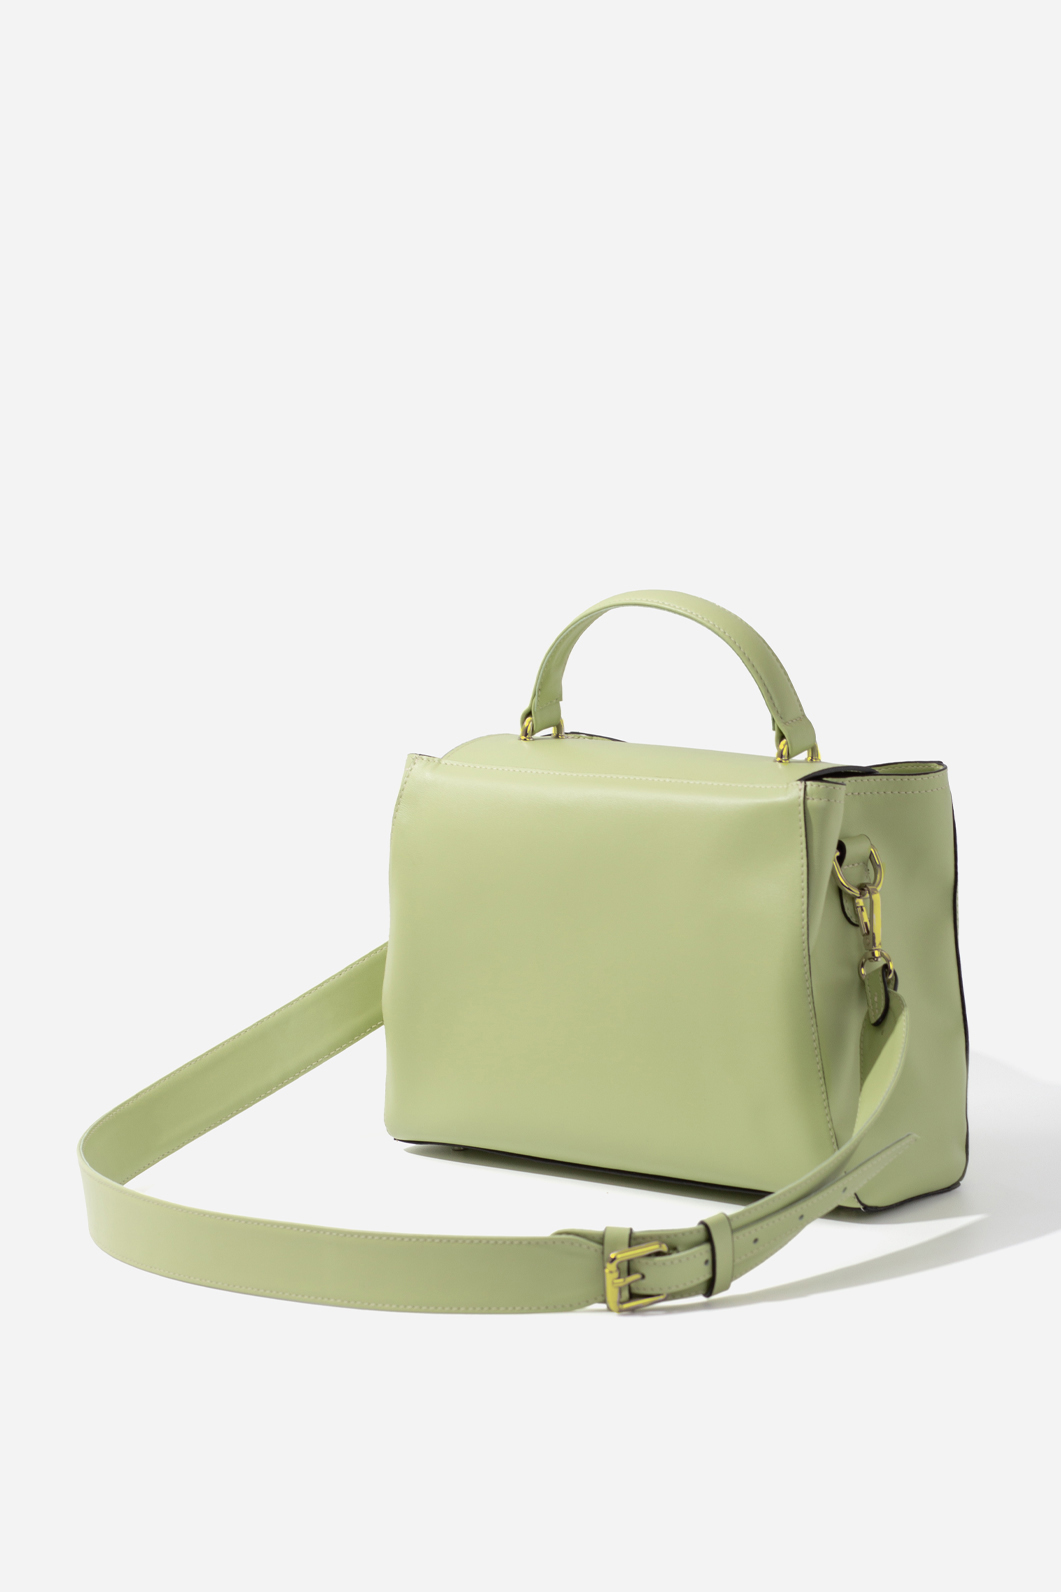 ERNA SOFT light green bag /gold/